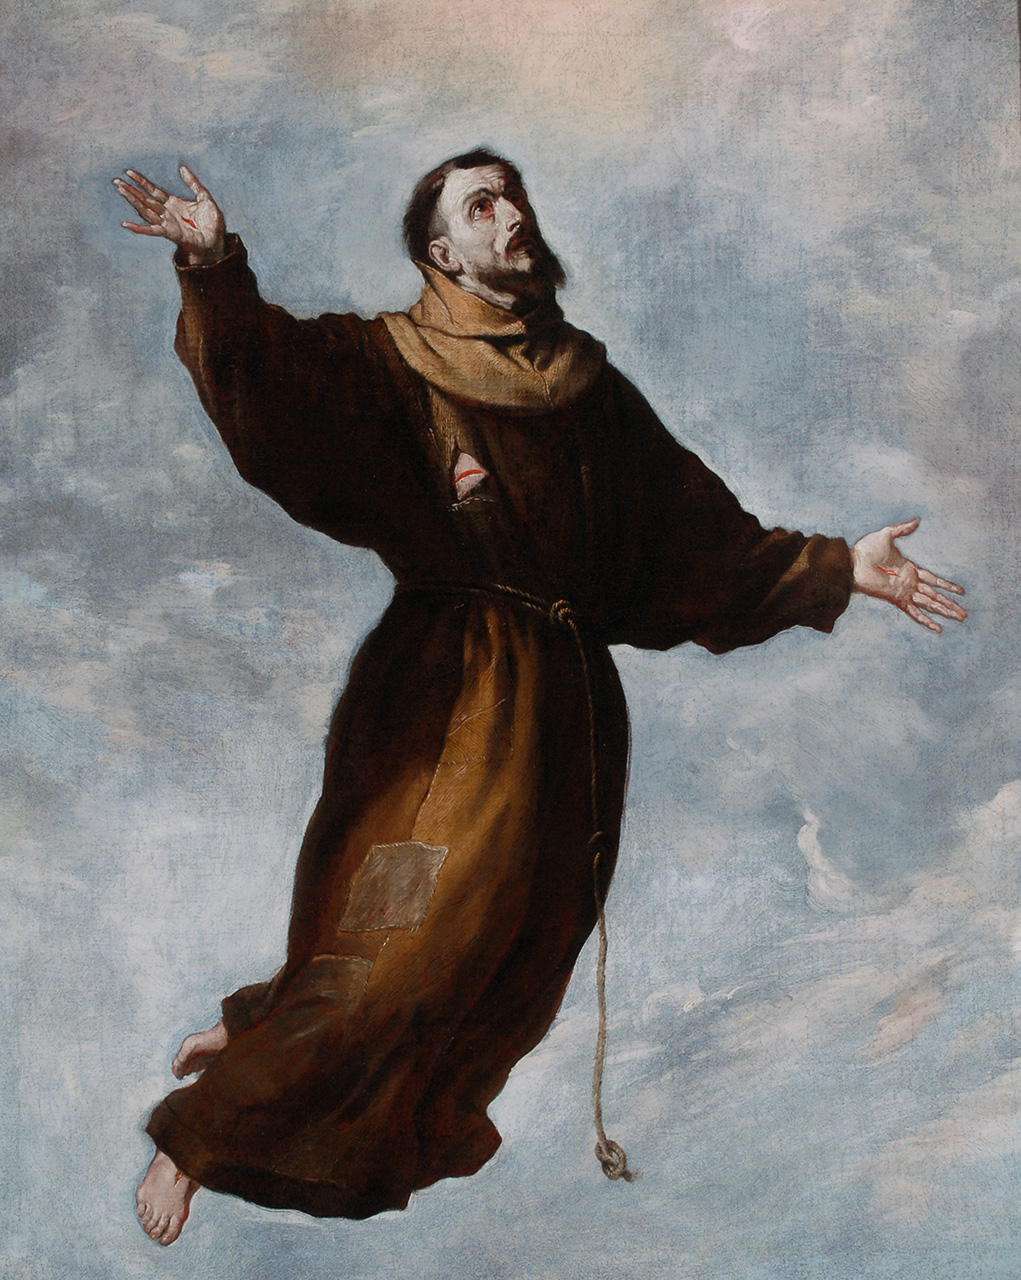 A Levitation of Saint Francis